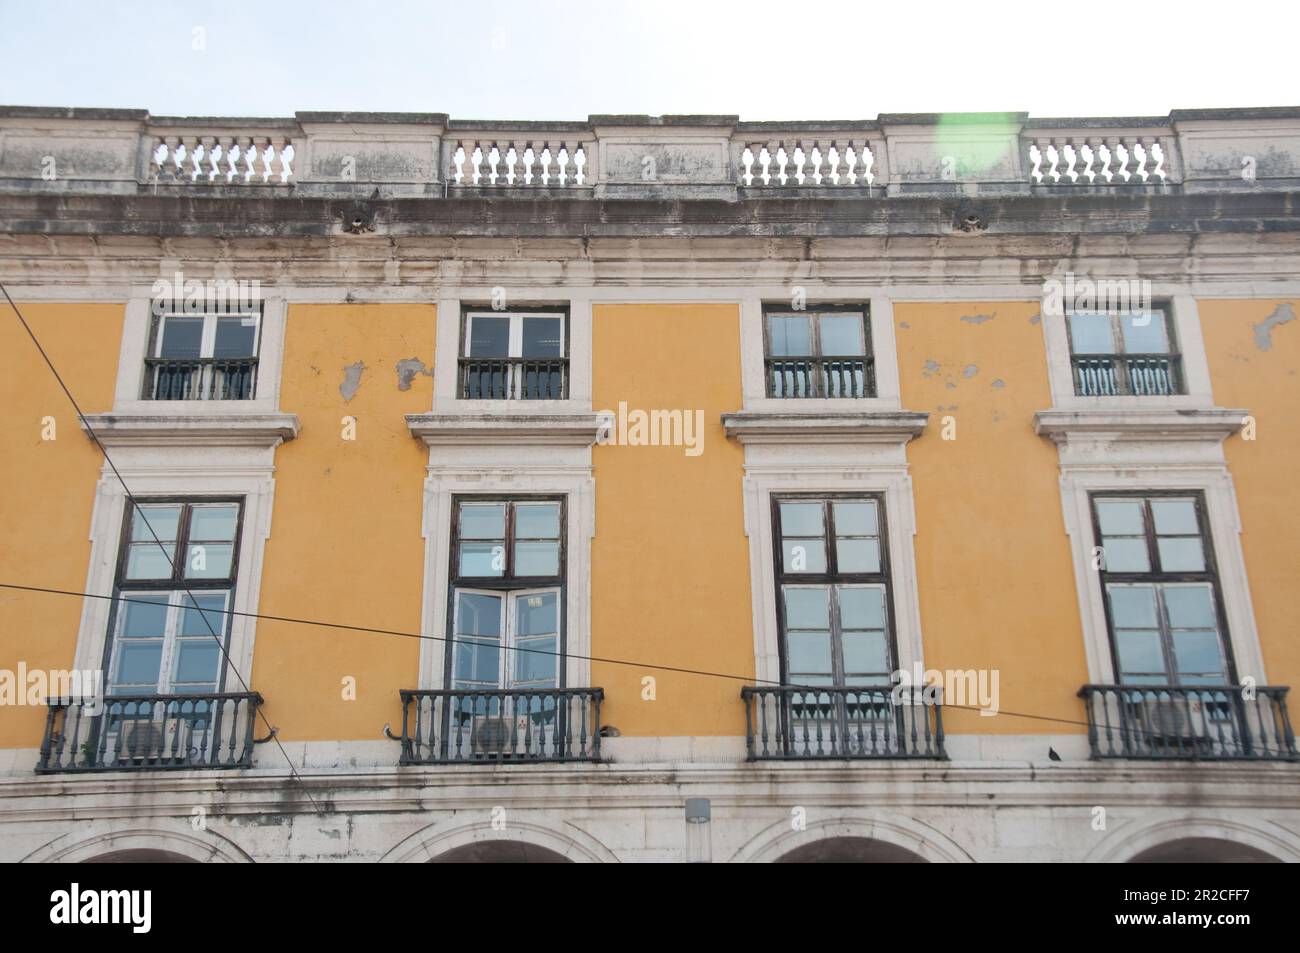 Upper Story buildings on Praca do Comercio, Lisbon, Portugal Stock Photo